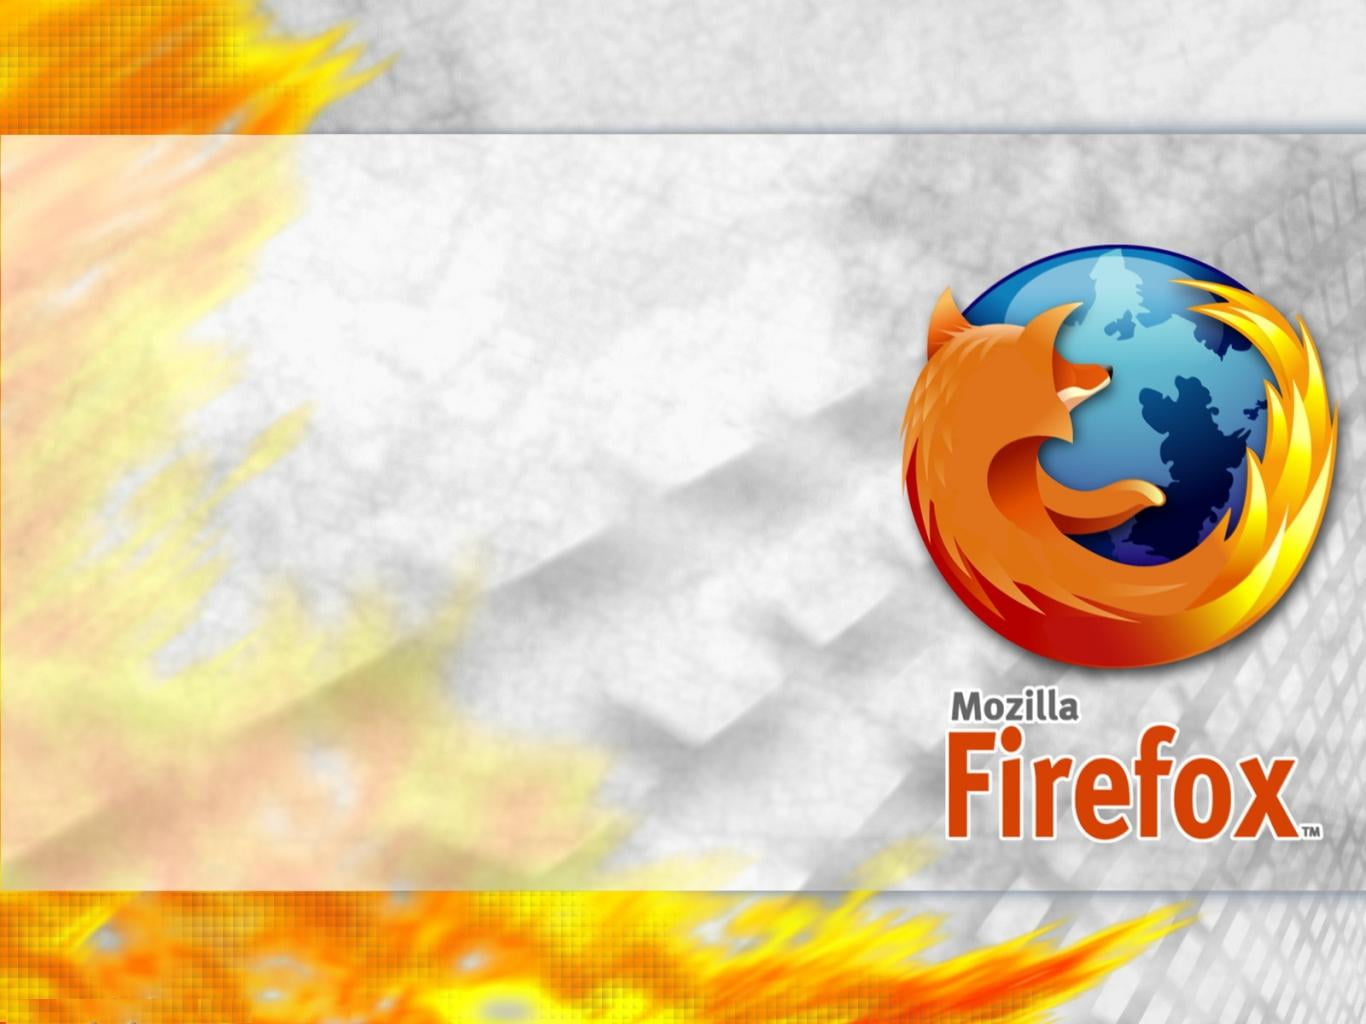 Cool Firefox, Mozilla Firefox logo, Computers, text, western script